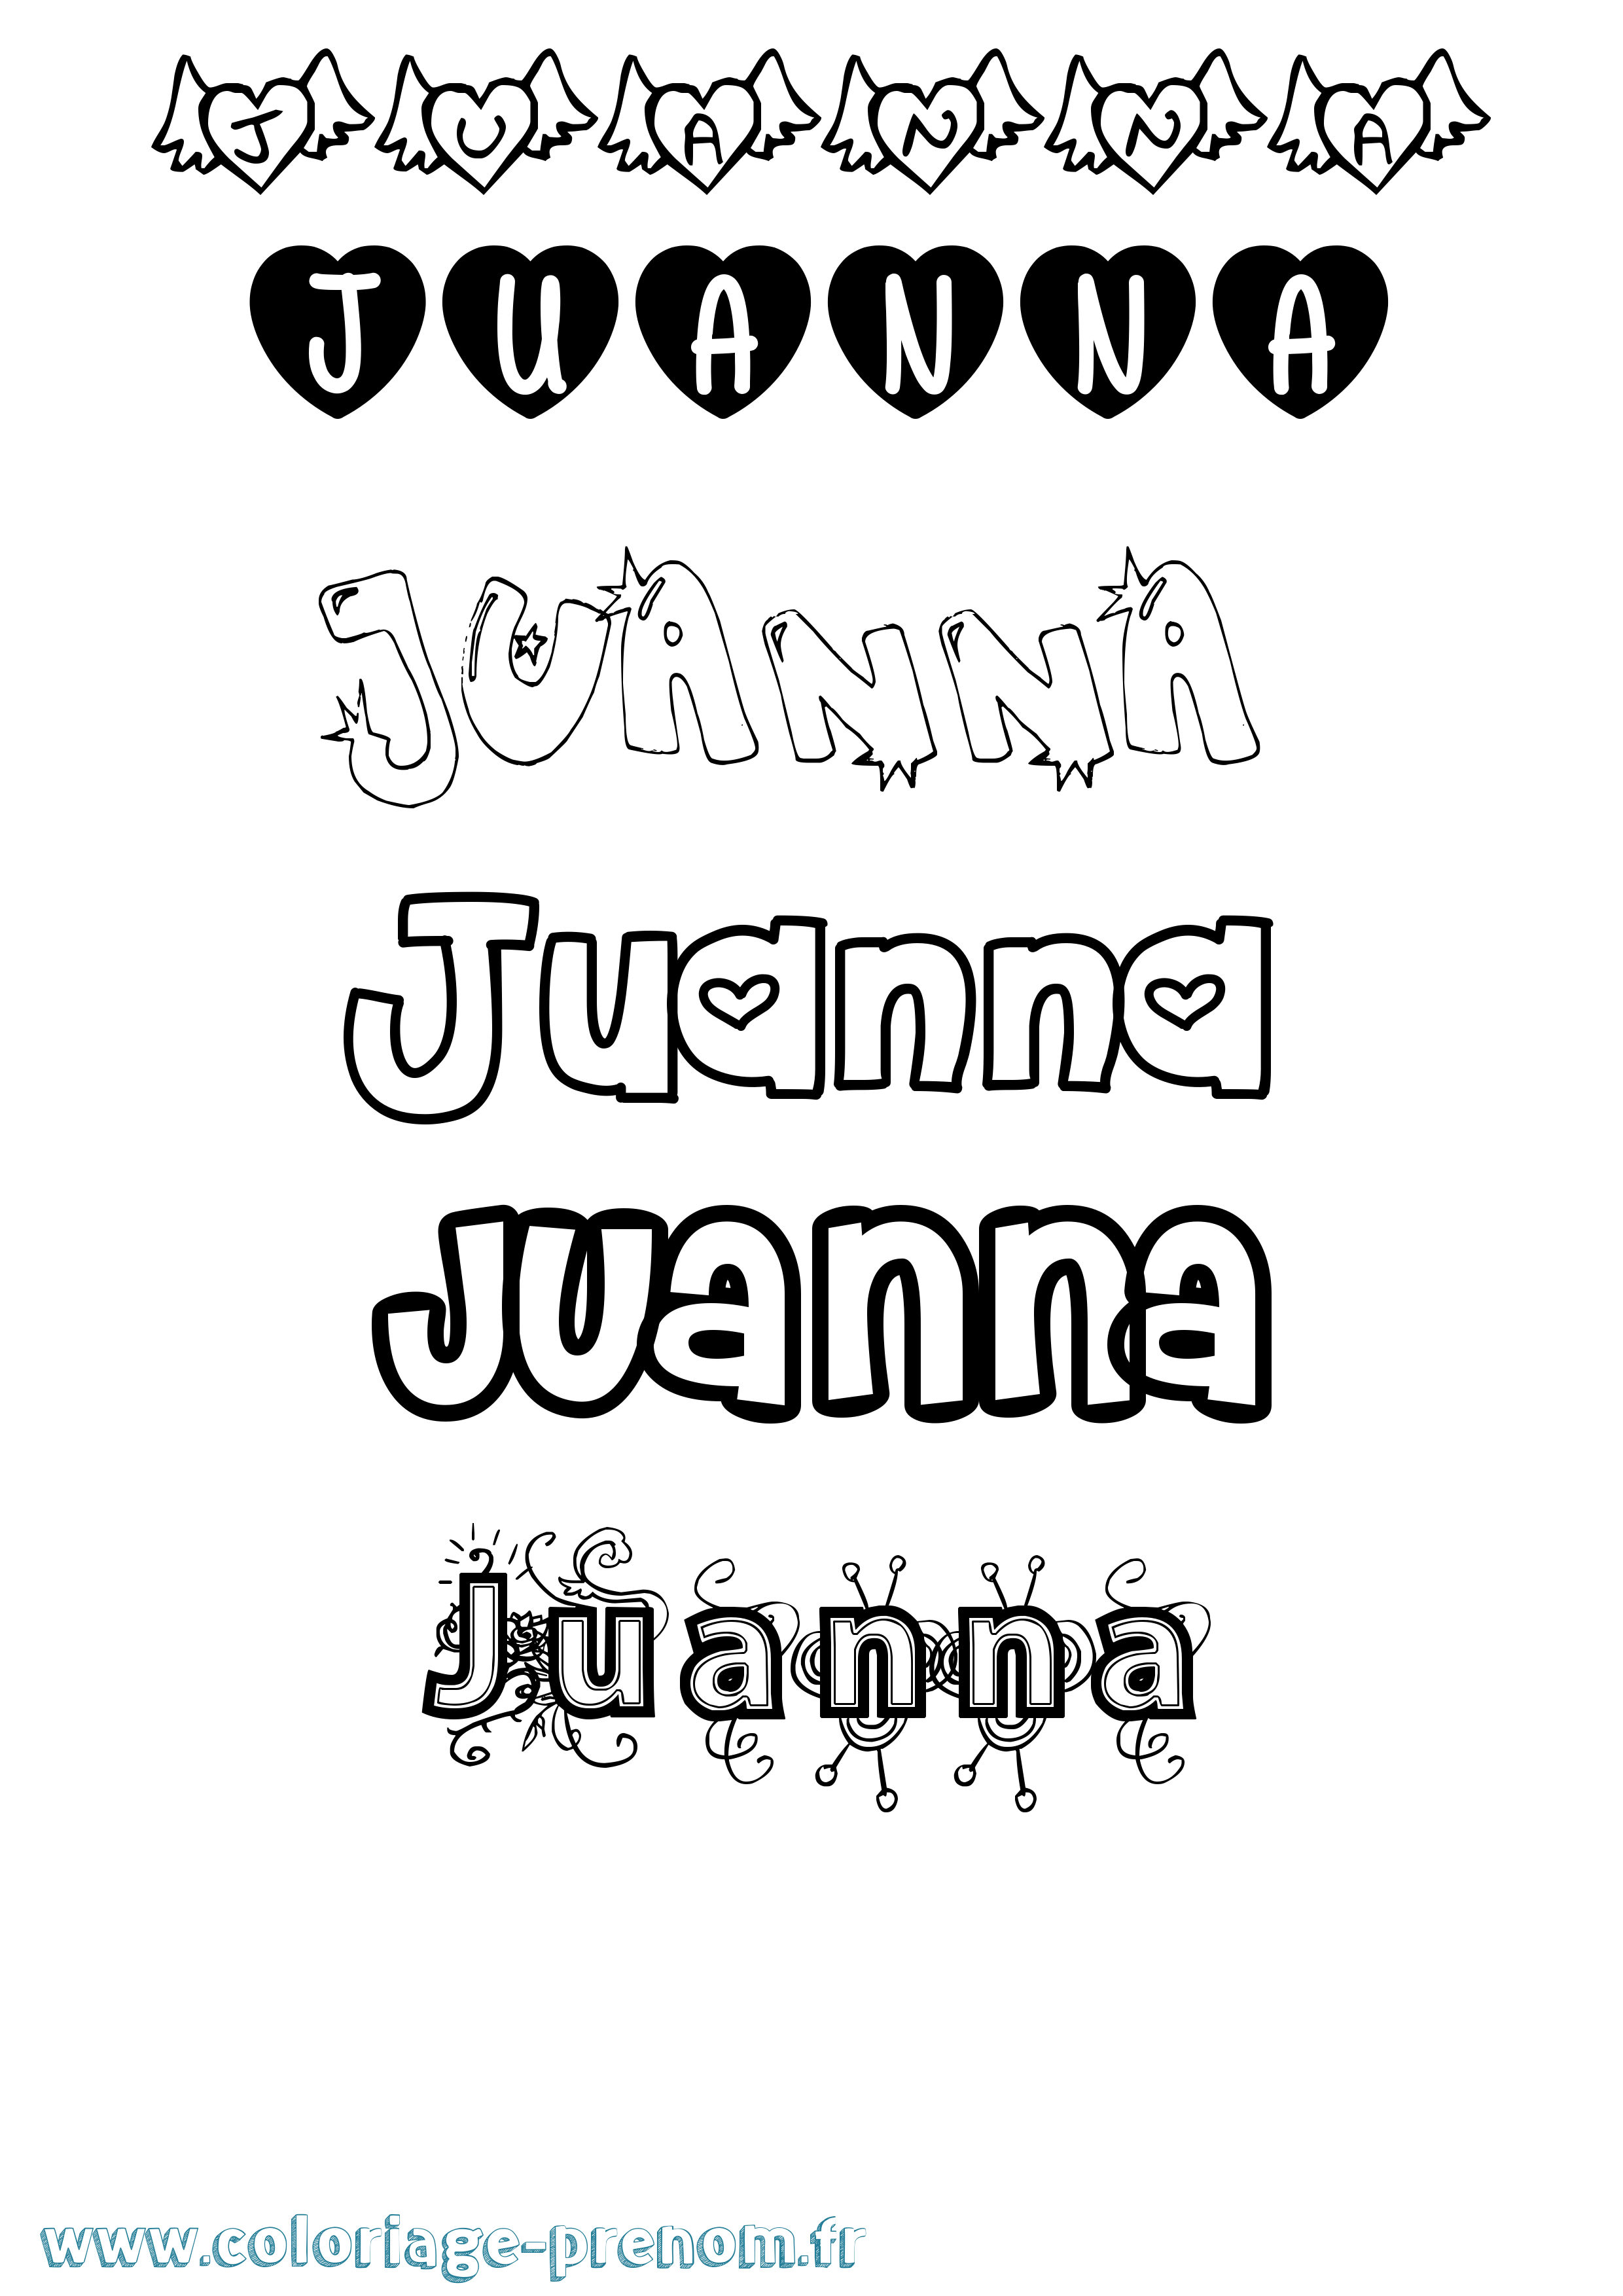 Coloriage prénom Juanna Girly